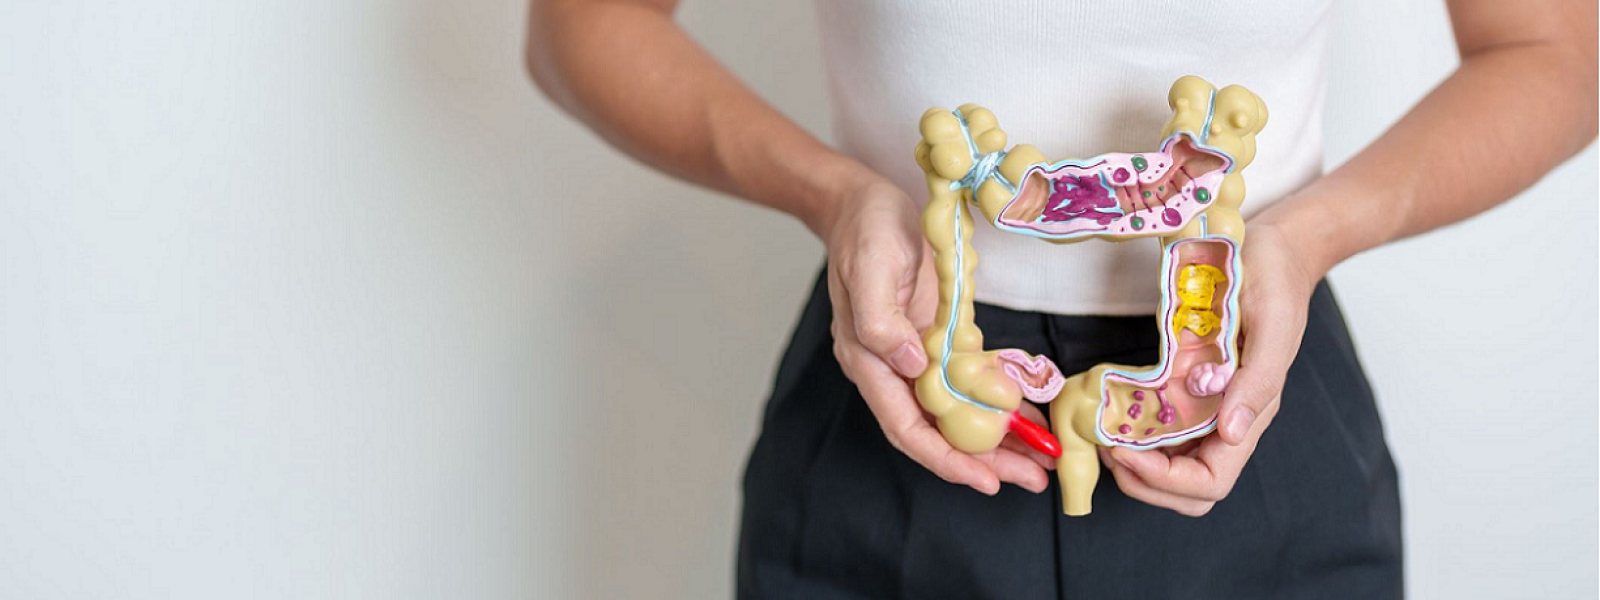 girl holding human colon model